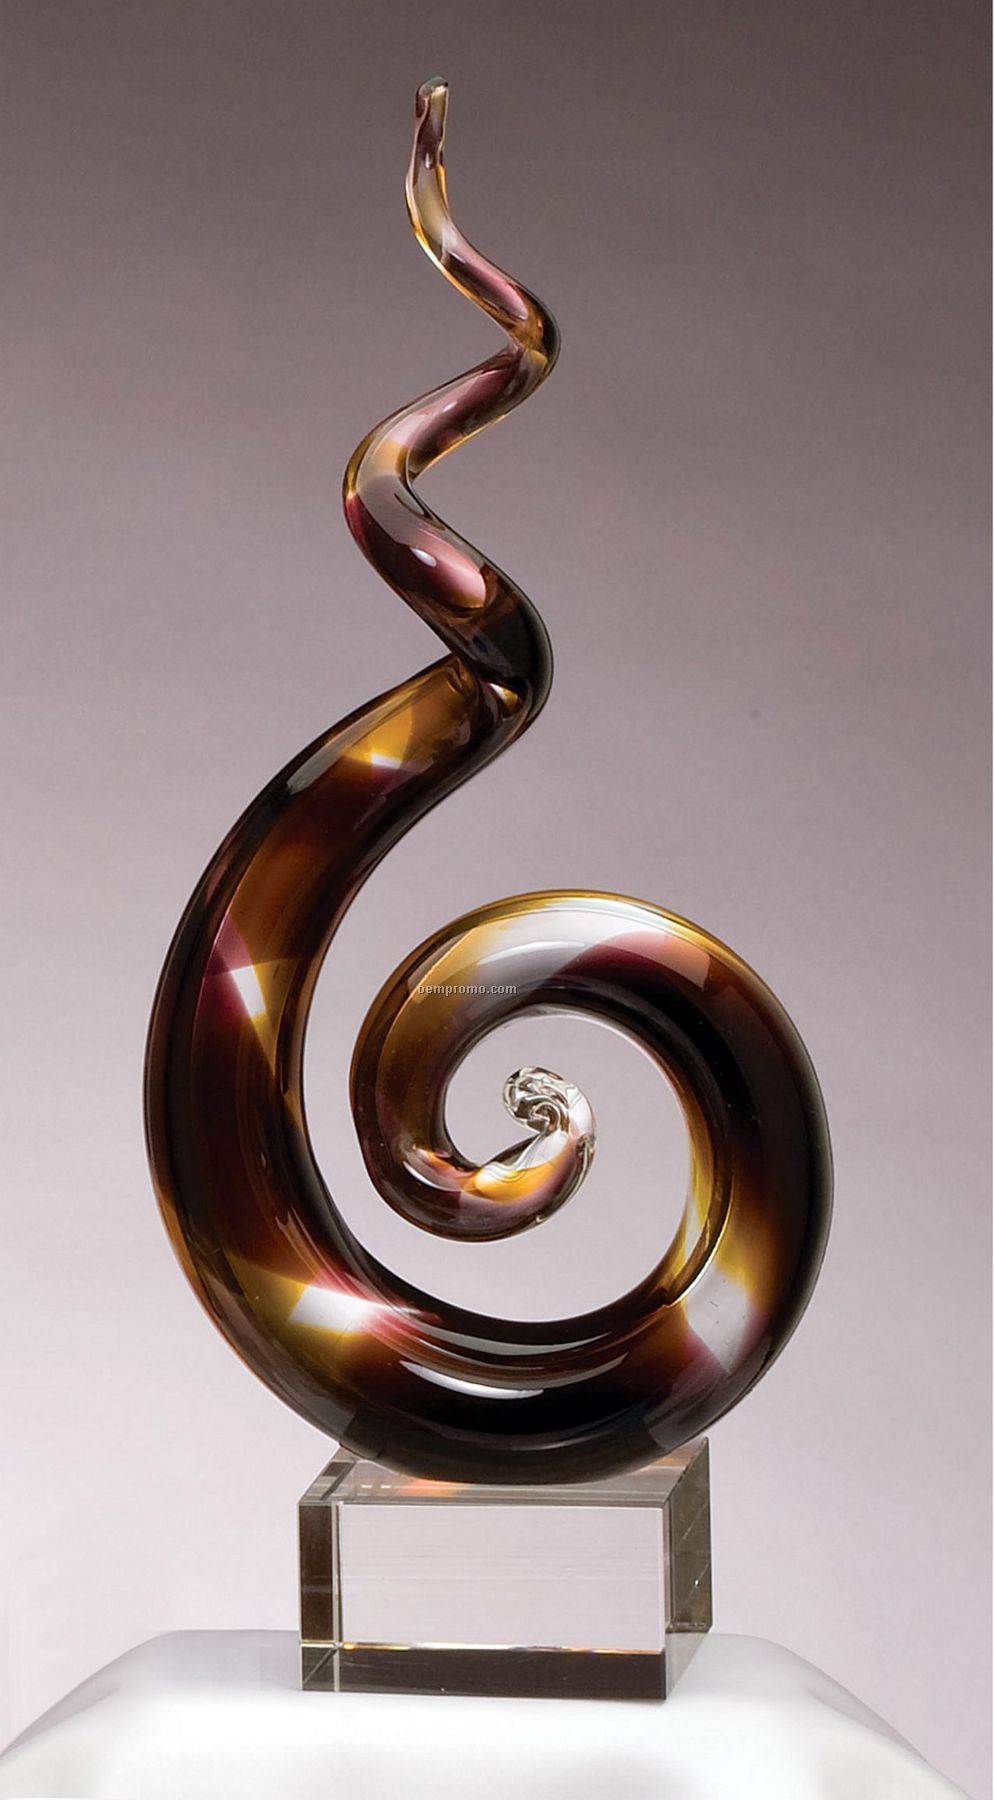 Purple And Gold Spiral Sculpture / Award